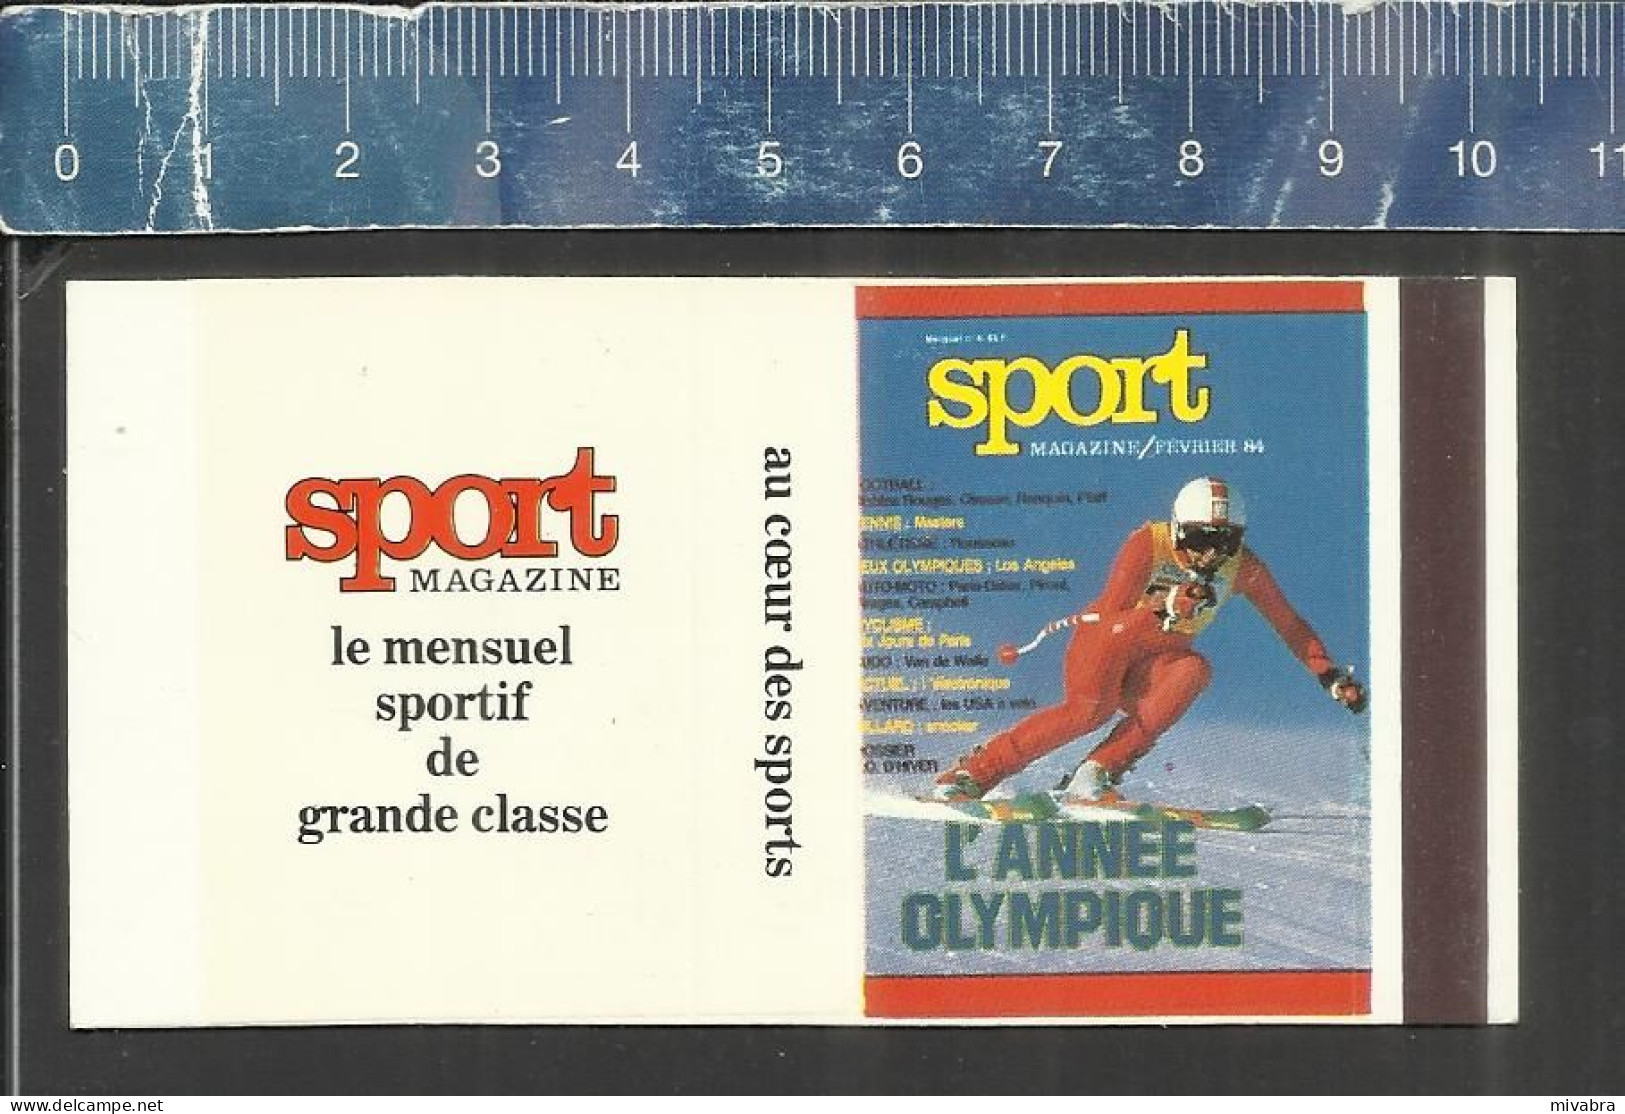 L'ANNÉE OLYMPIQUE - 1984 WINTER SARAJEVO  - 1988 LOS ANGELES SUMMER  ) -  - SPORT MAGAZINE   - MATCHBOX SKILLET BELGIUM - Boites D'allumettes - Etiquettes